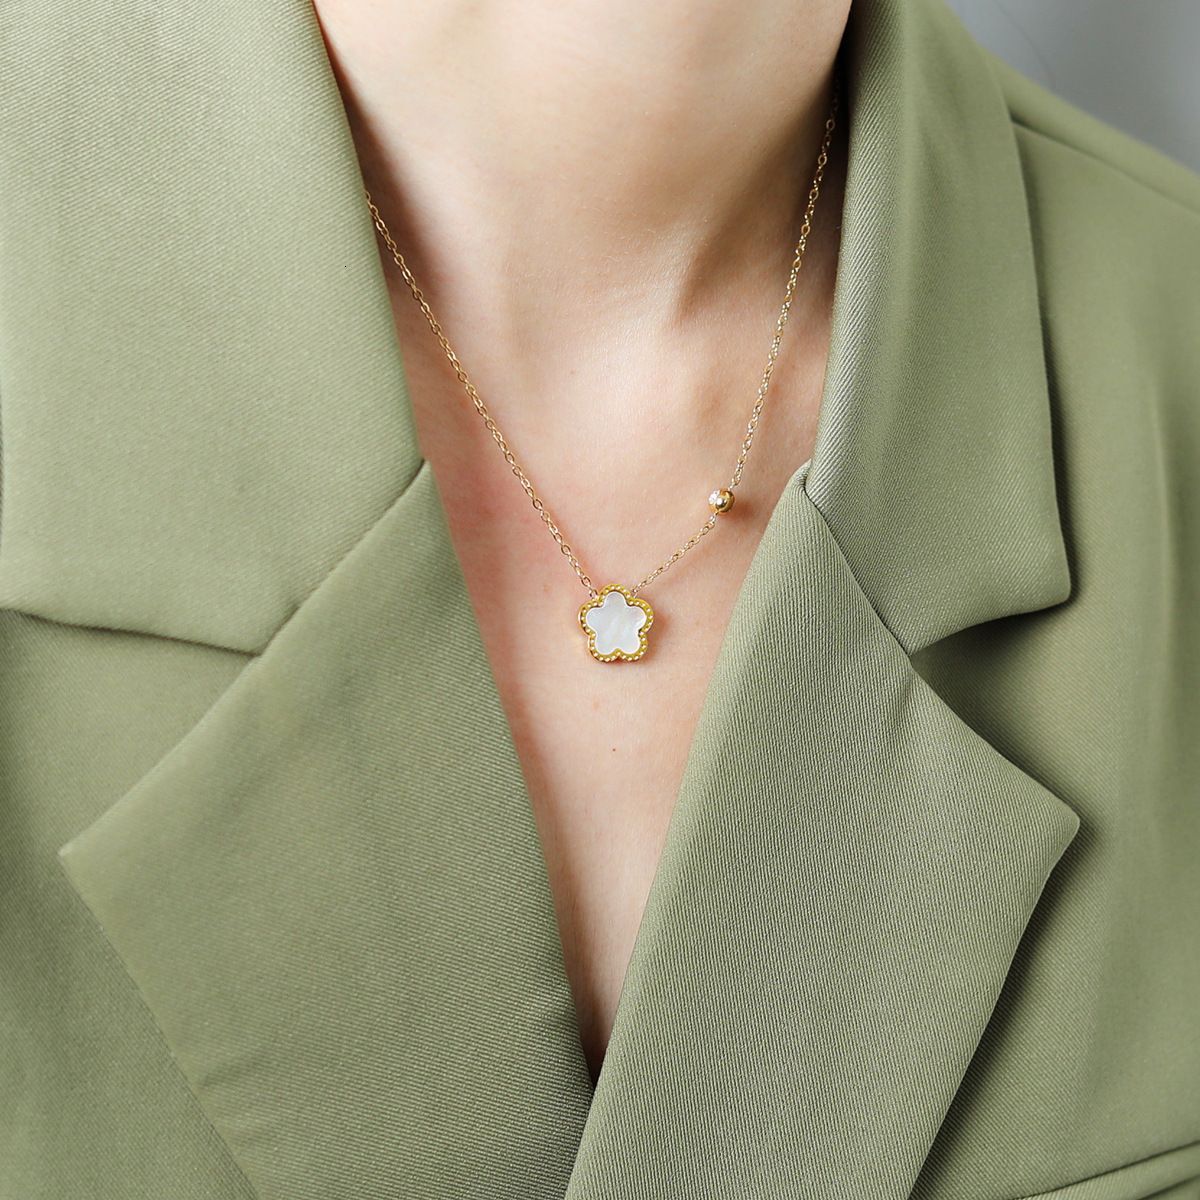 CARLIDANA Luxury Vintage Four Leaf Clover Pendant Necklace Fashion